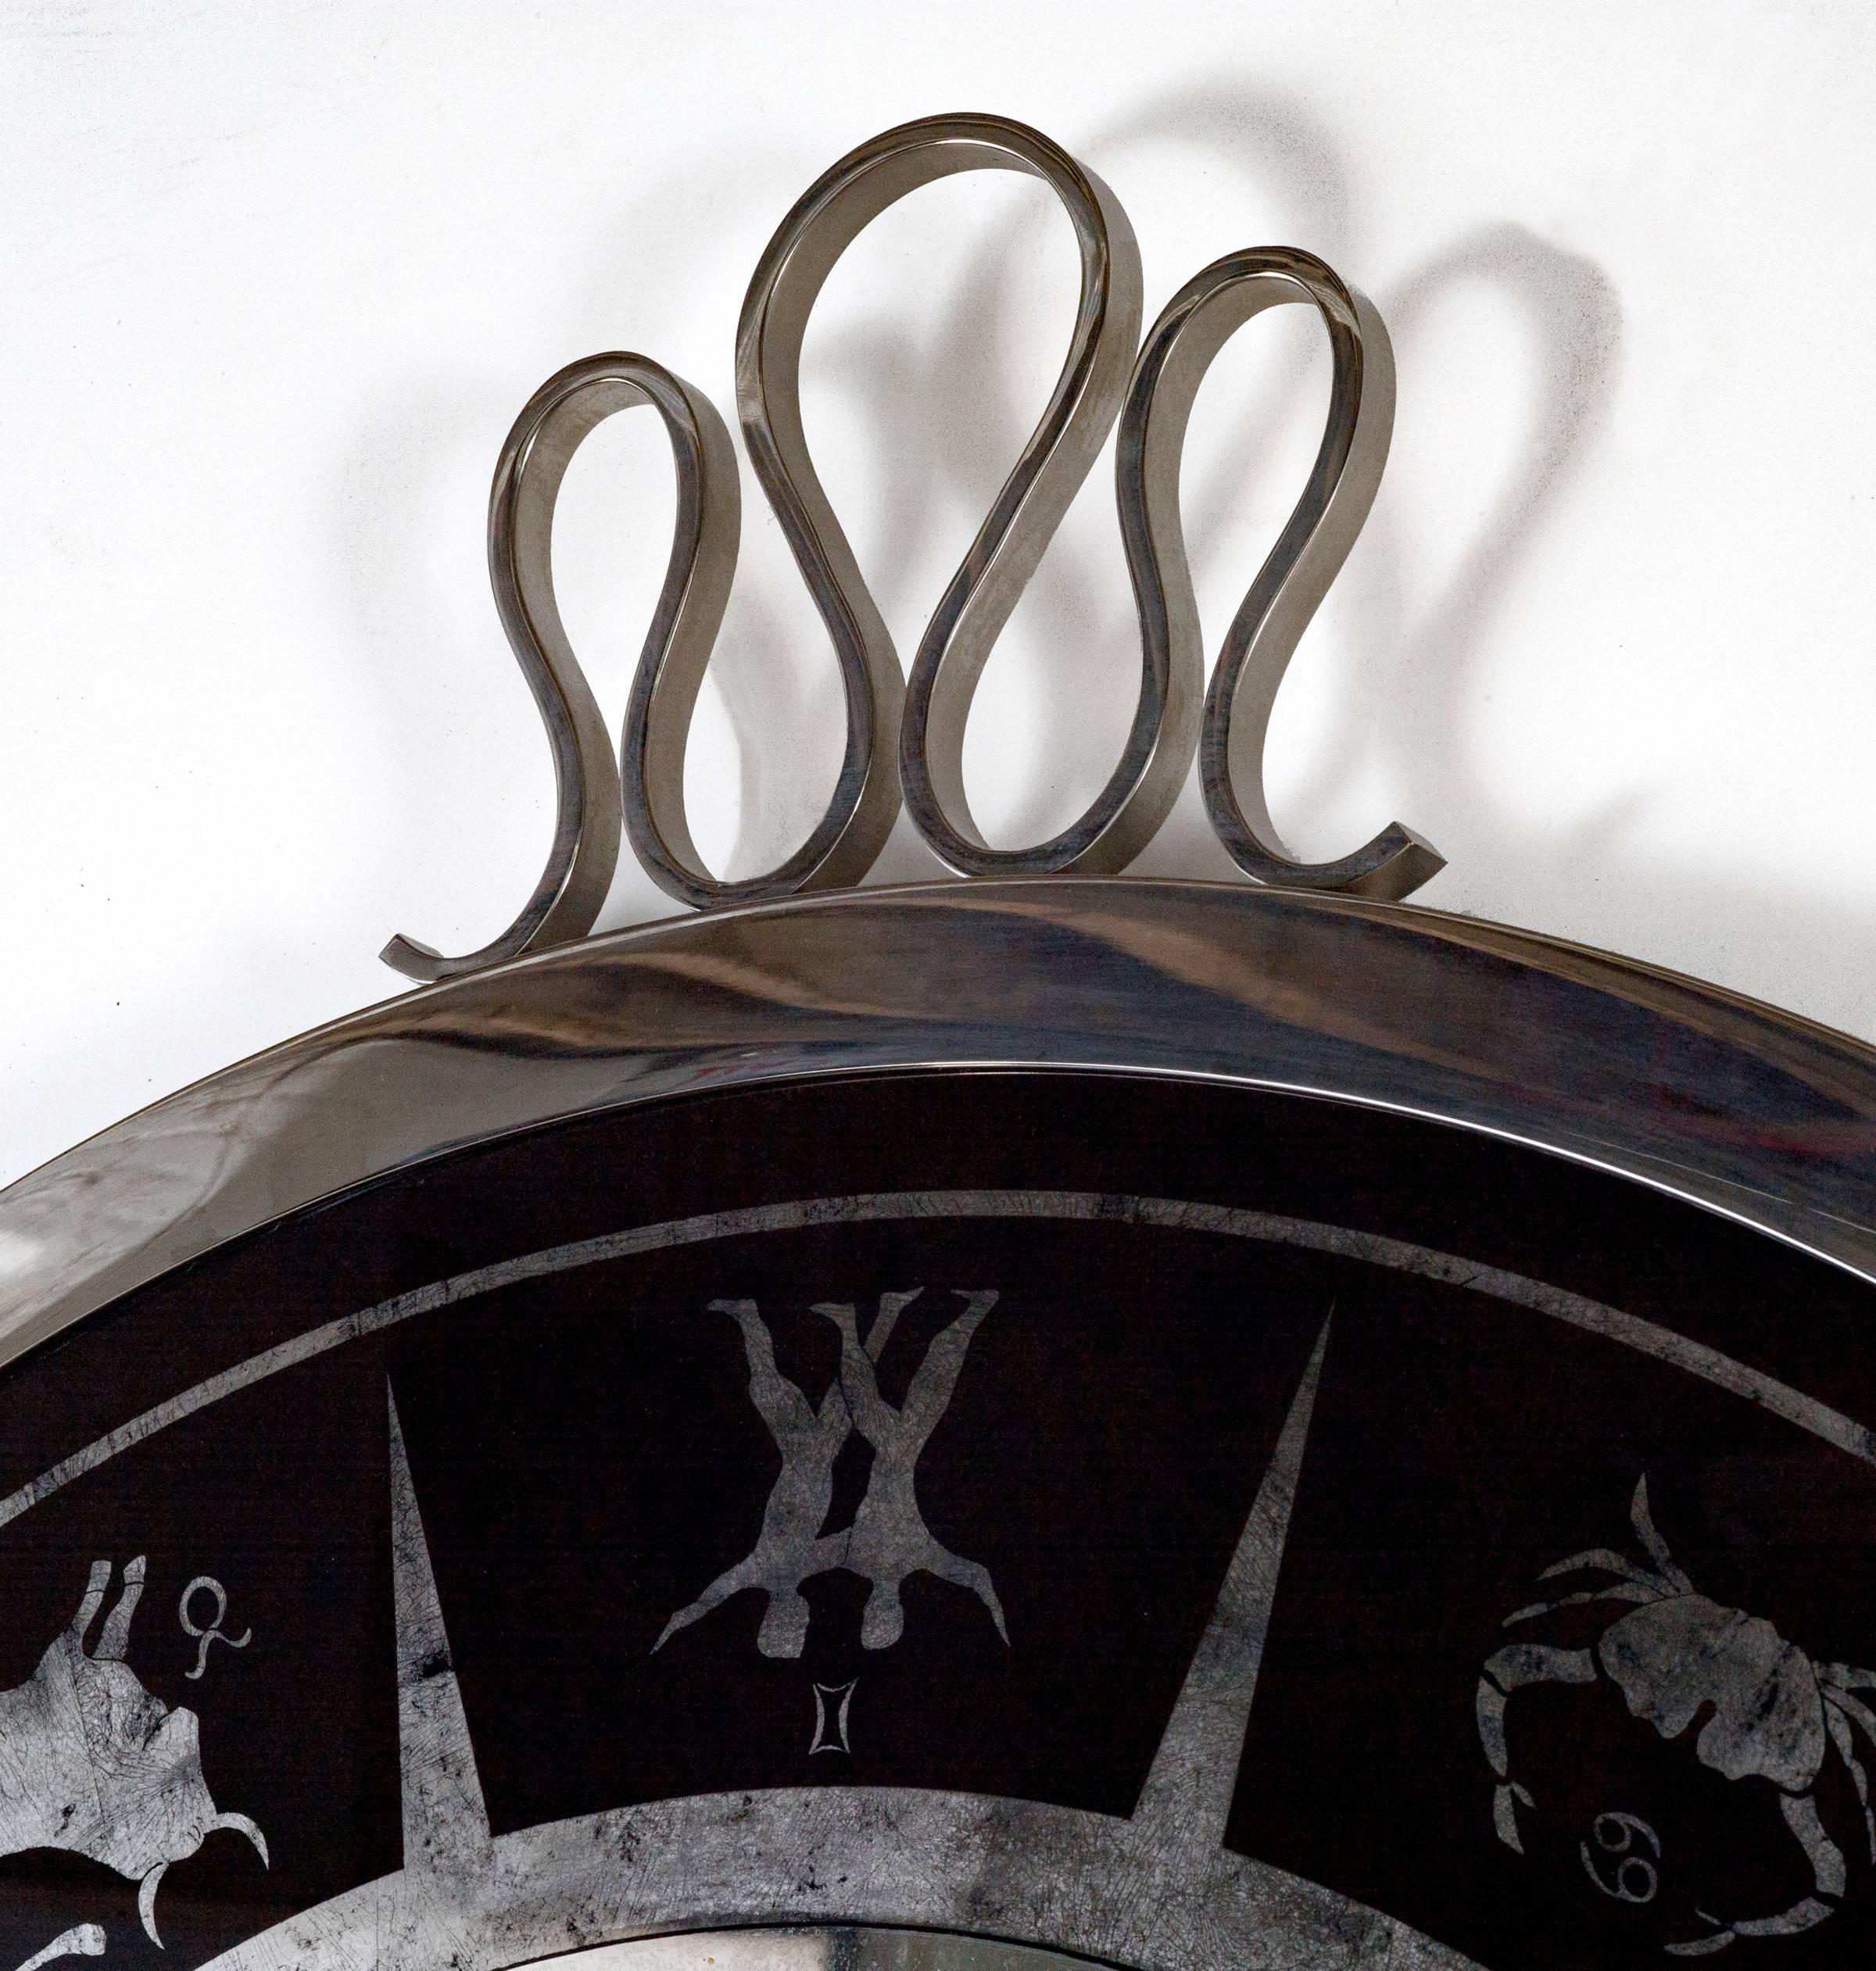 Round Zodiac mirror
Mirrored centre panel with silver leaf églomisé astrological figures
Measure: H 42 1/2